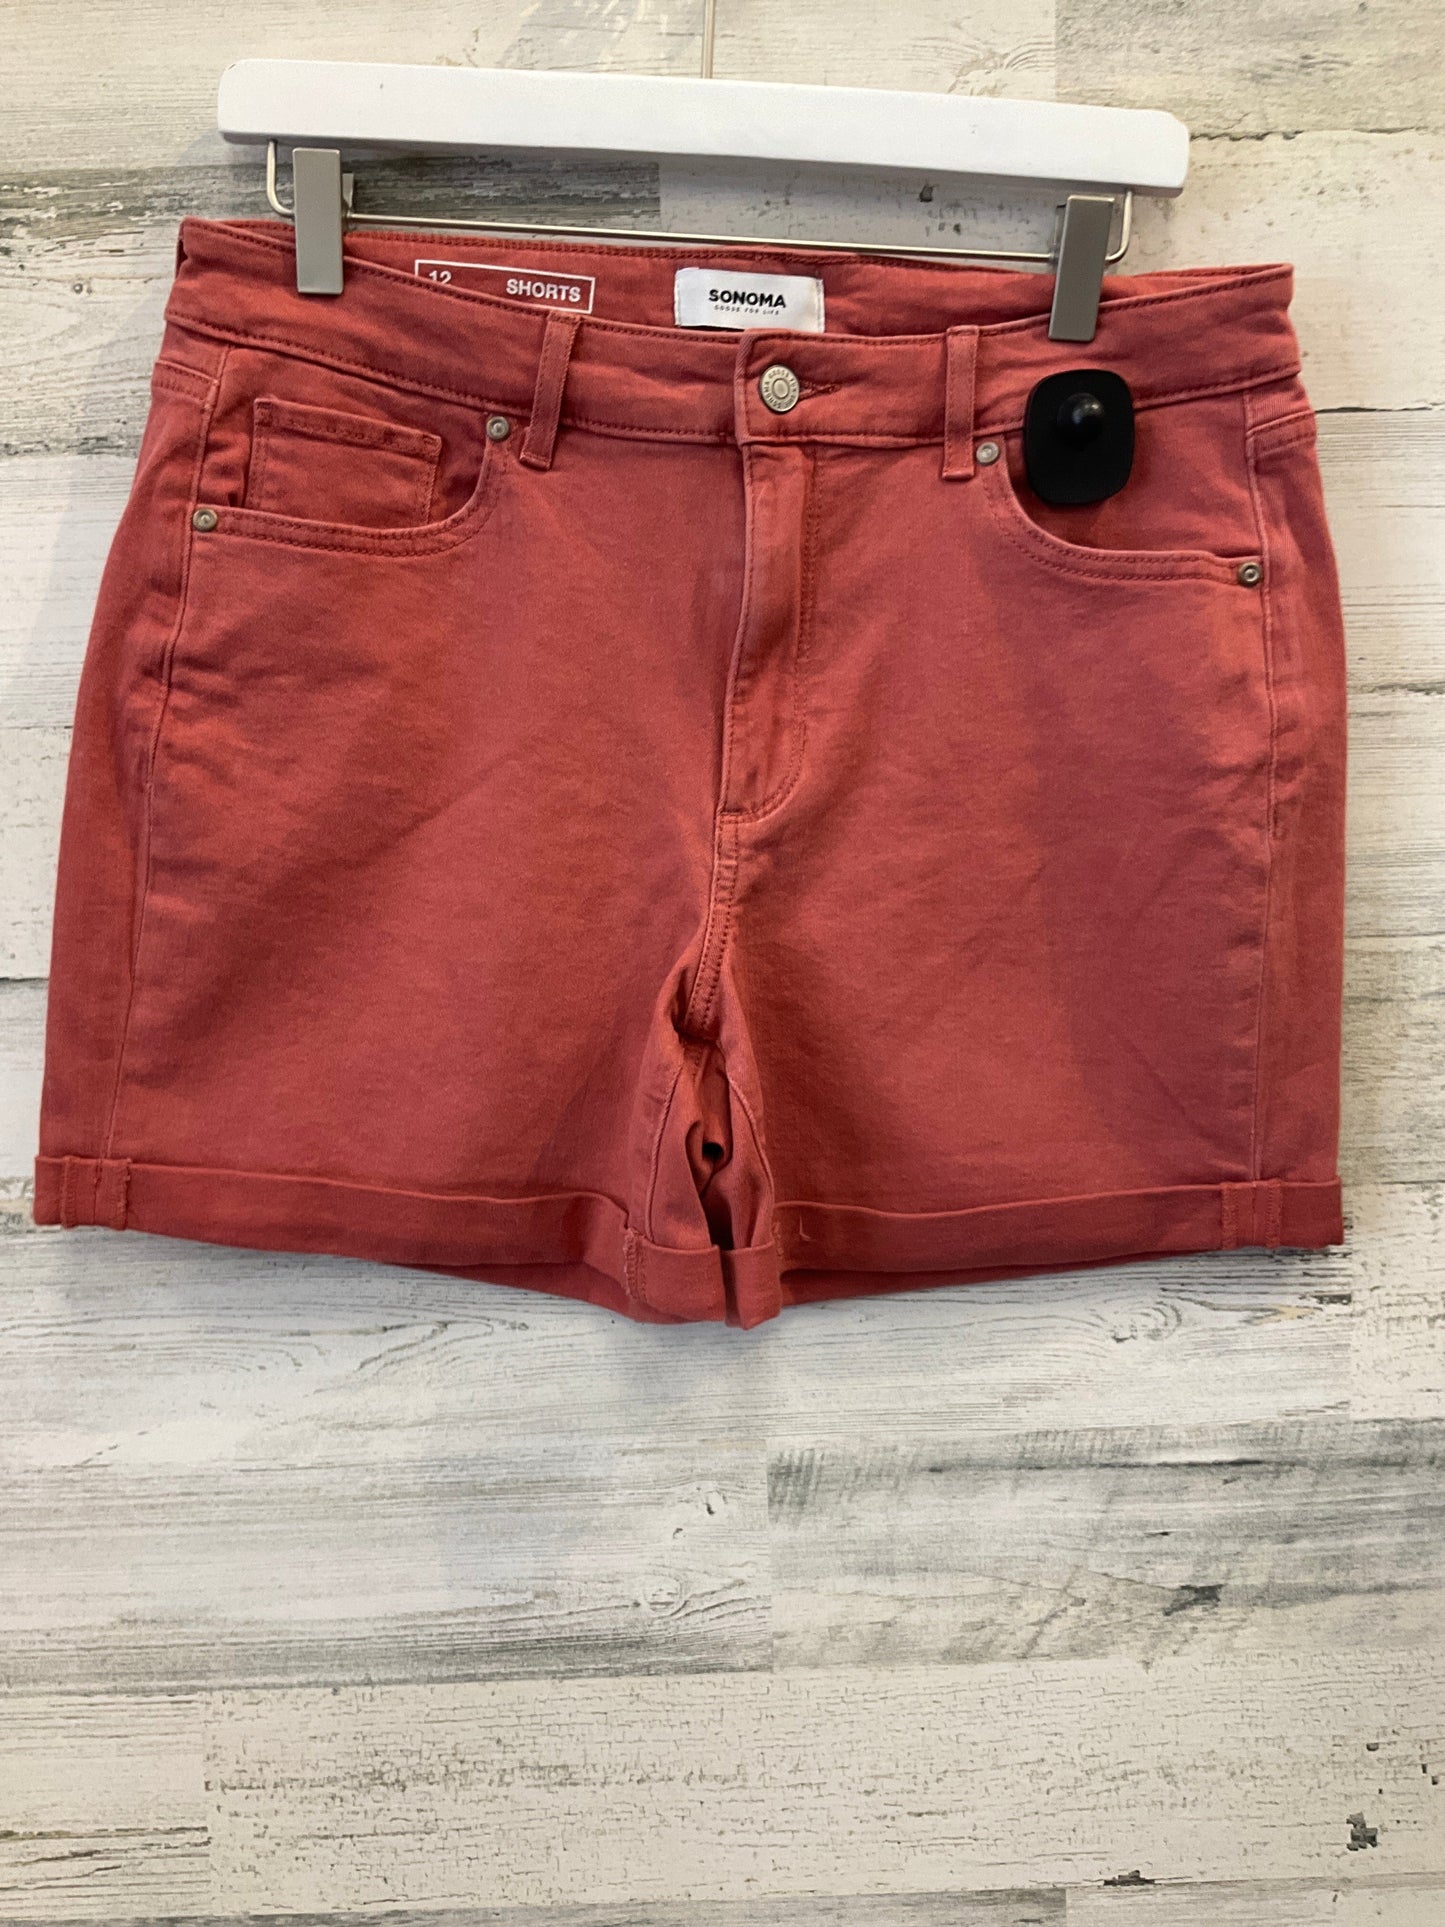 Peach Shorts Sonoma, Size 12